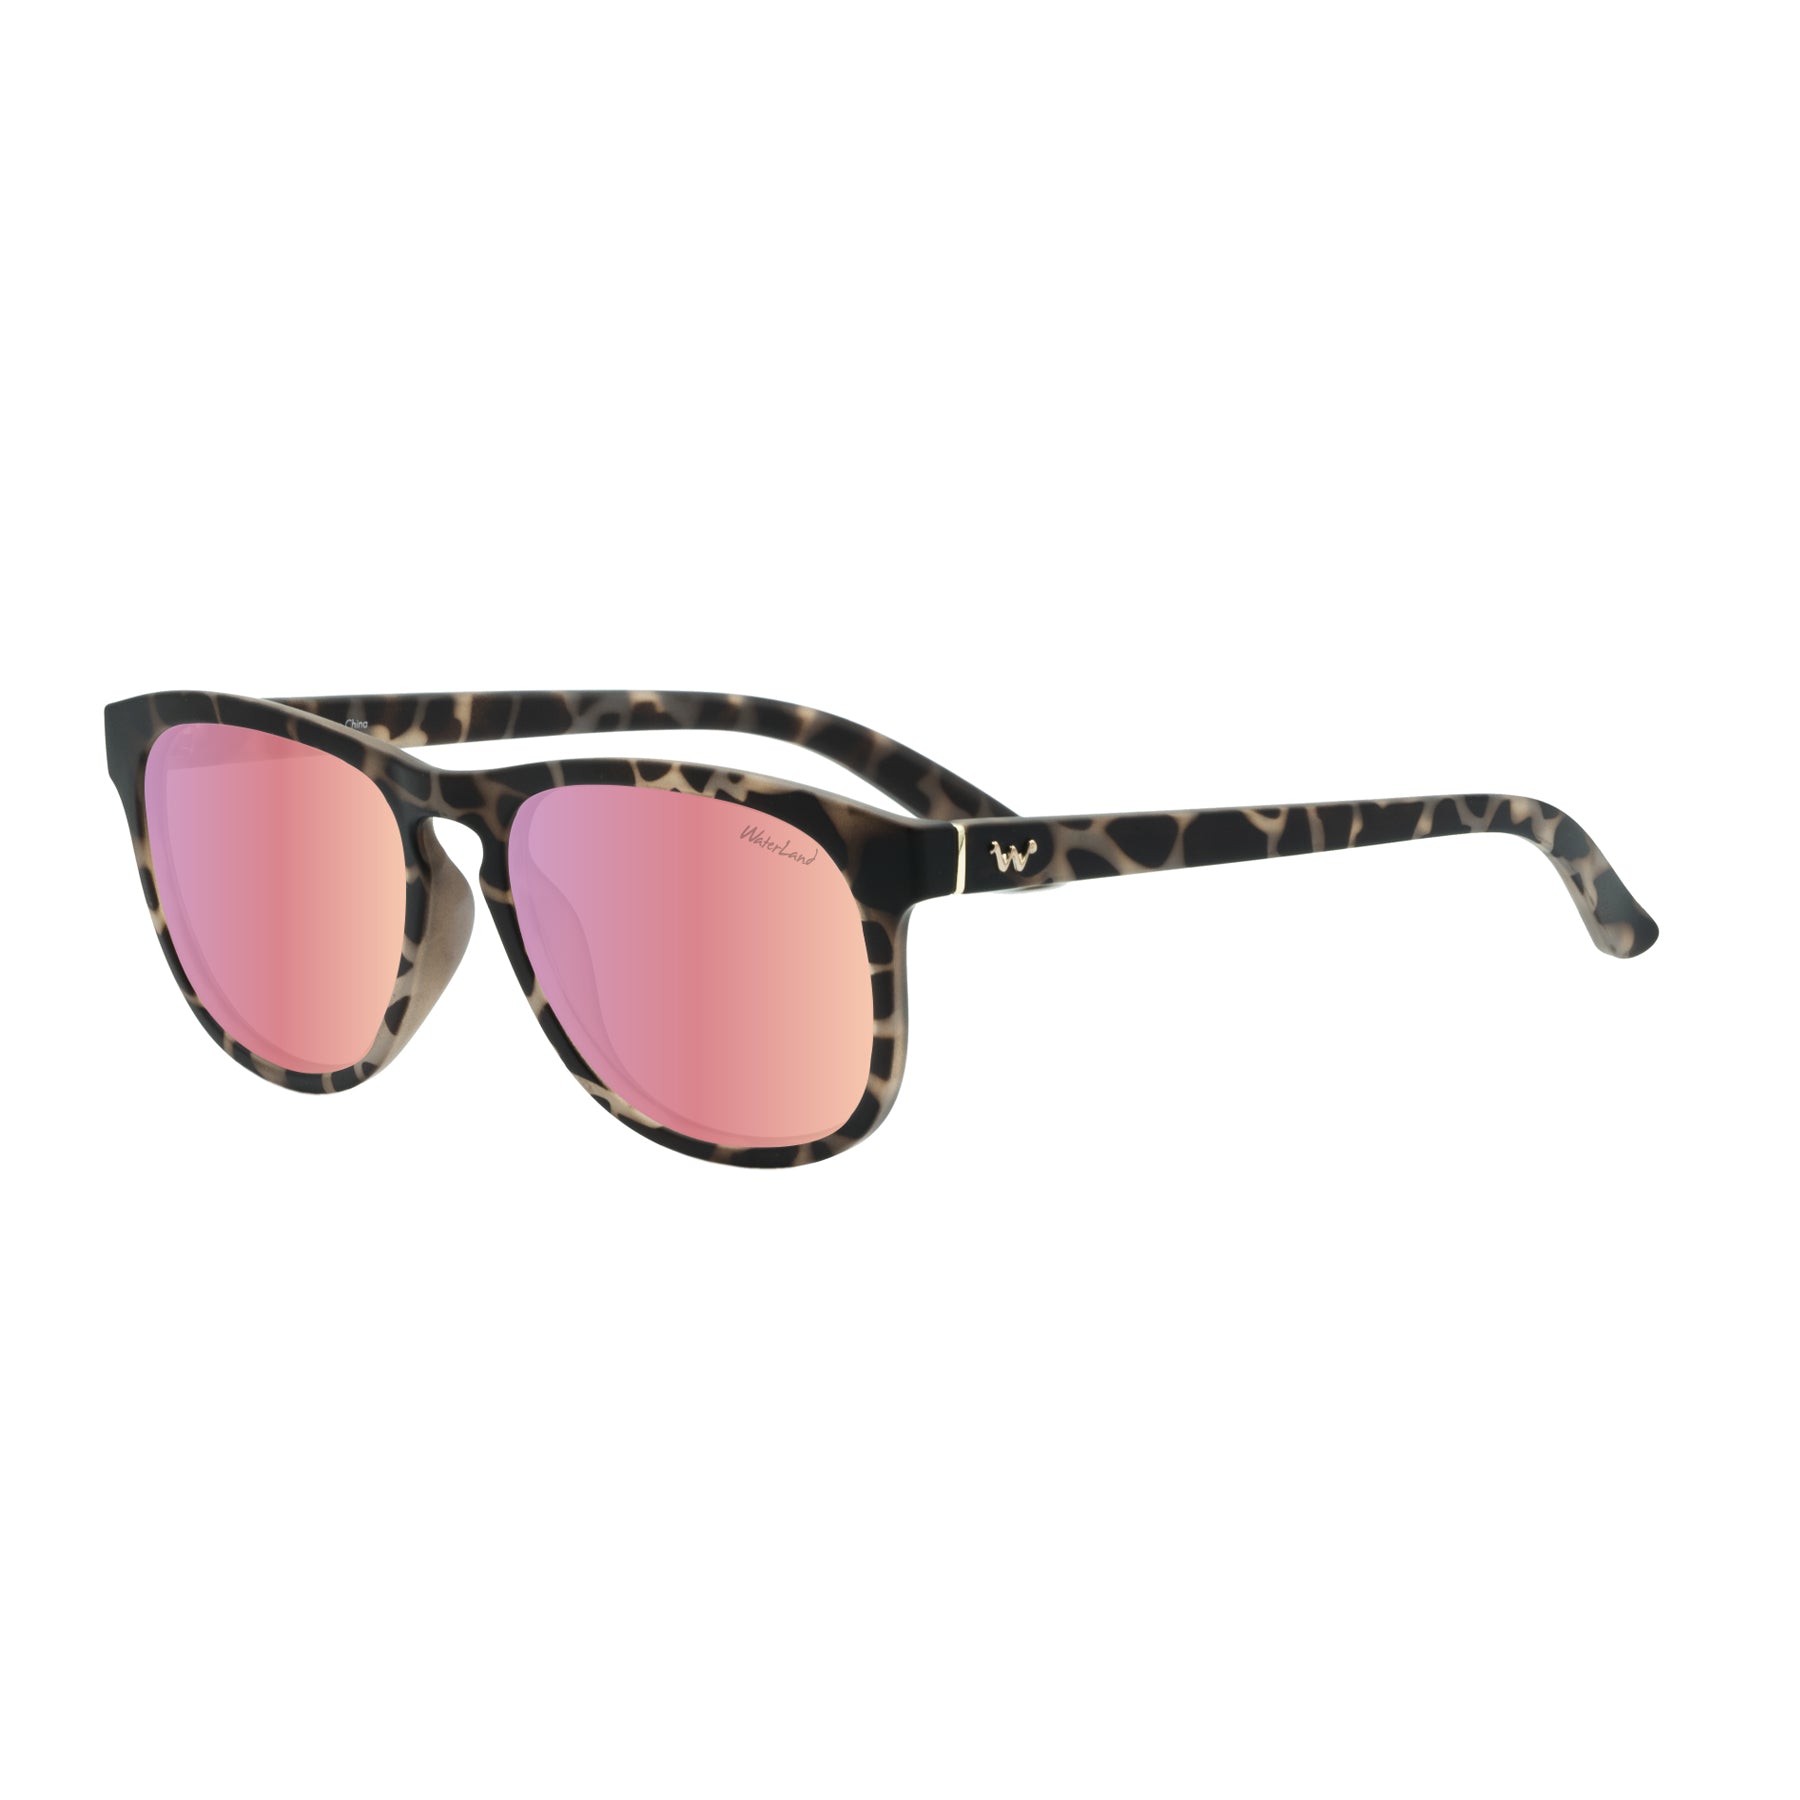 WaterLand Polarized Sunglasses - Ladi Series – 6th Sense Fishing